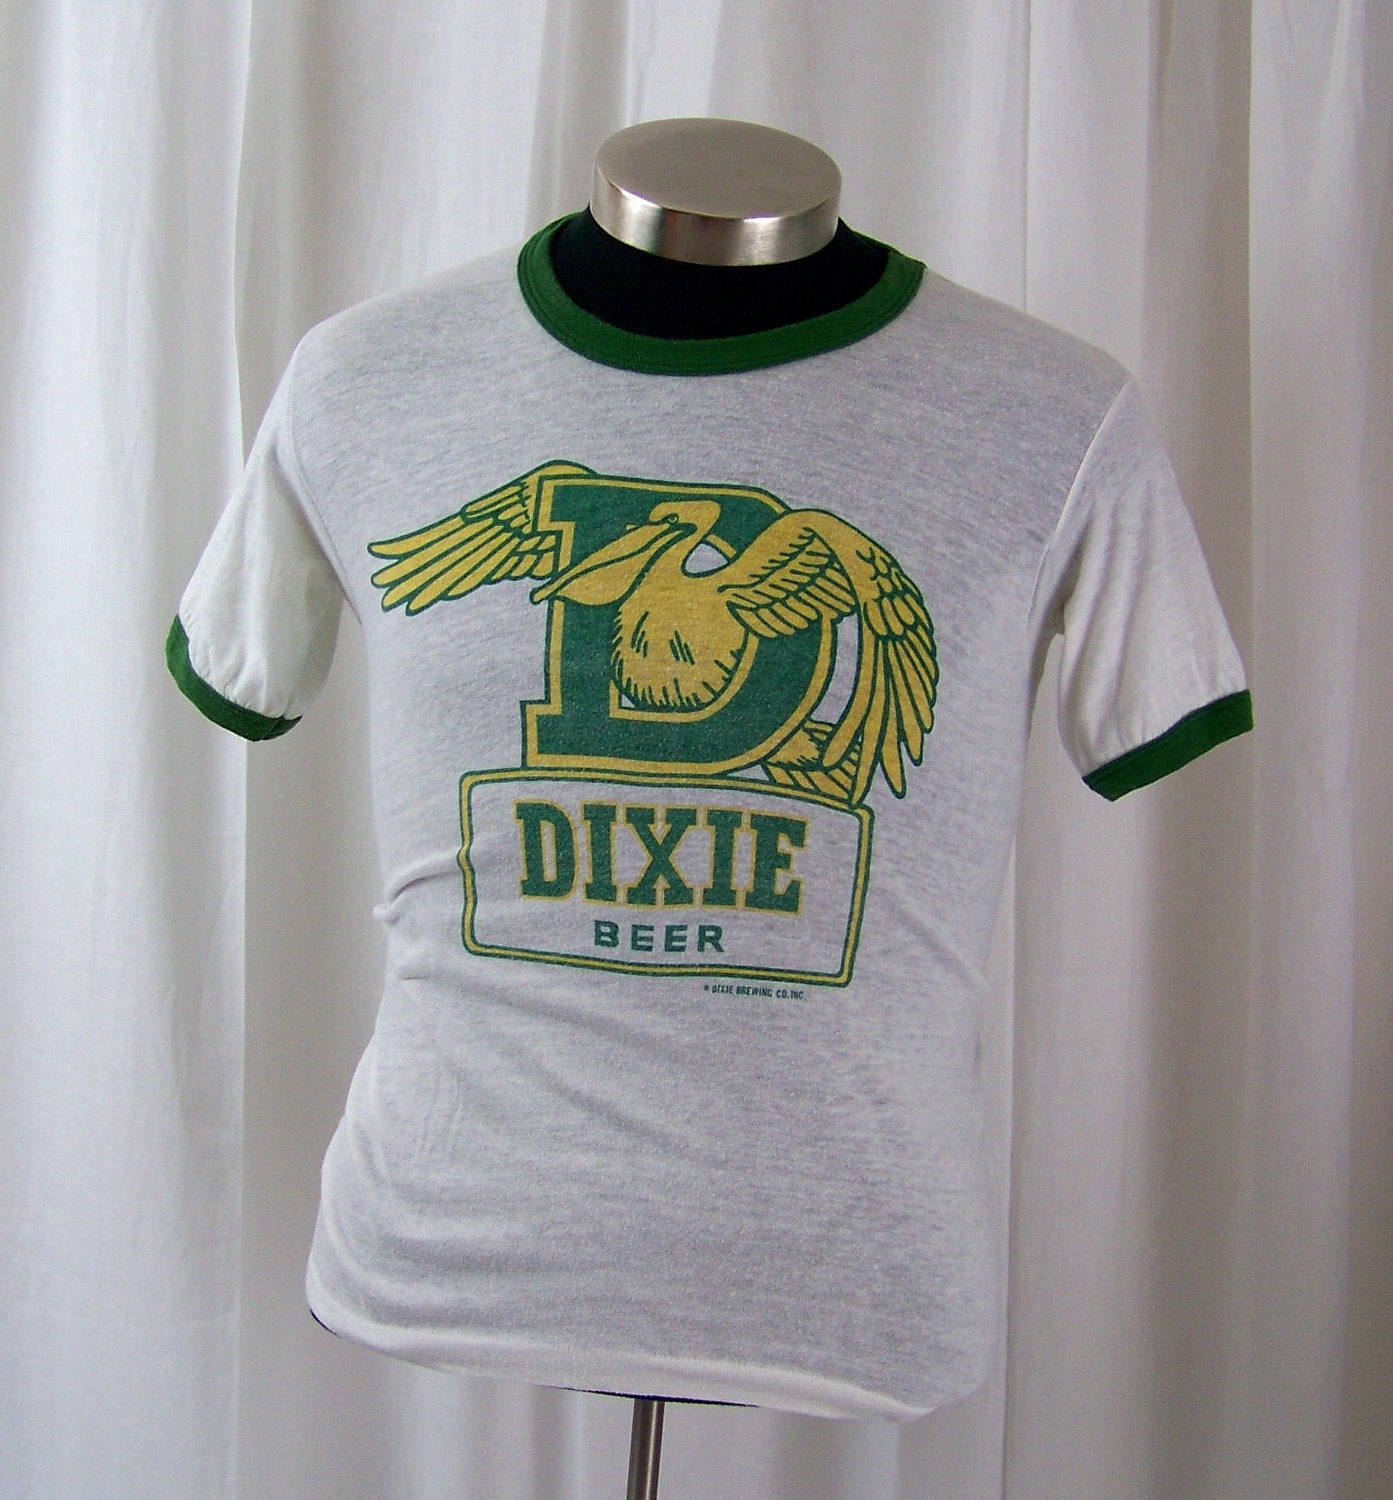 Vintage 1970s Dixie Beer ringer t shirt